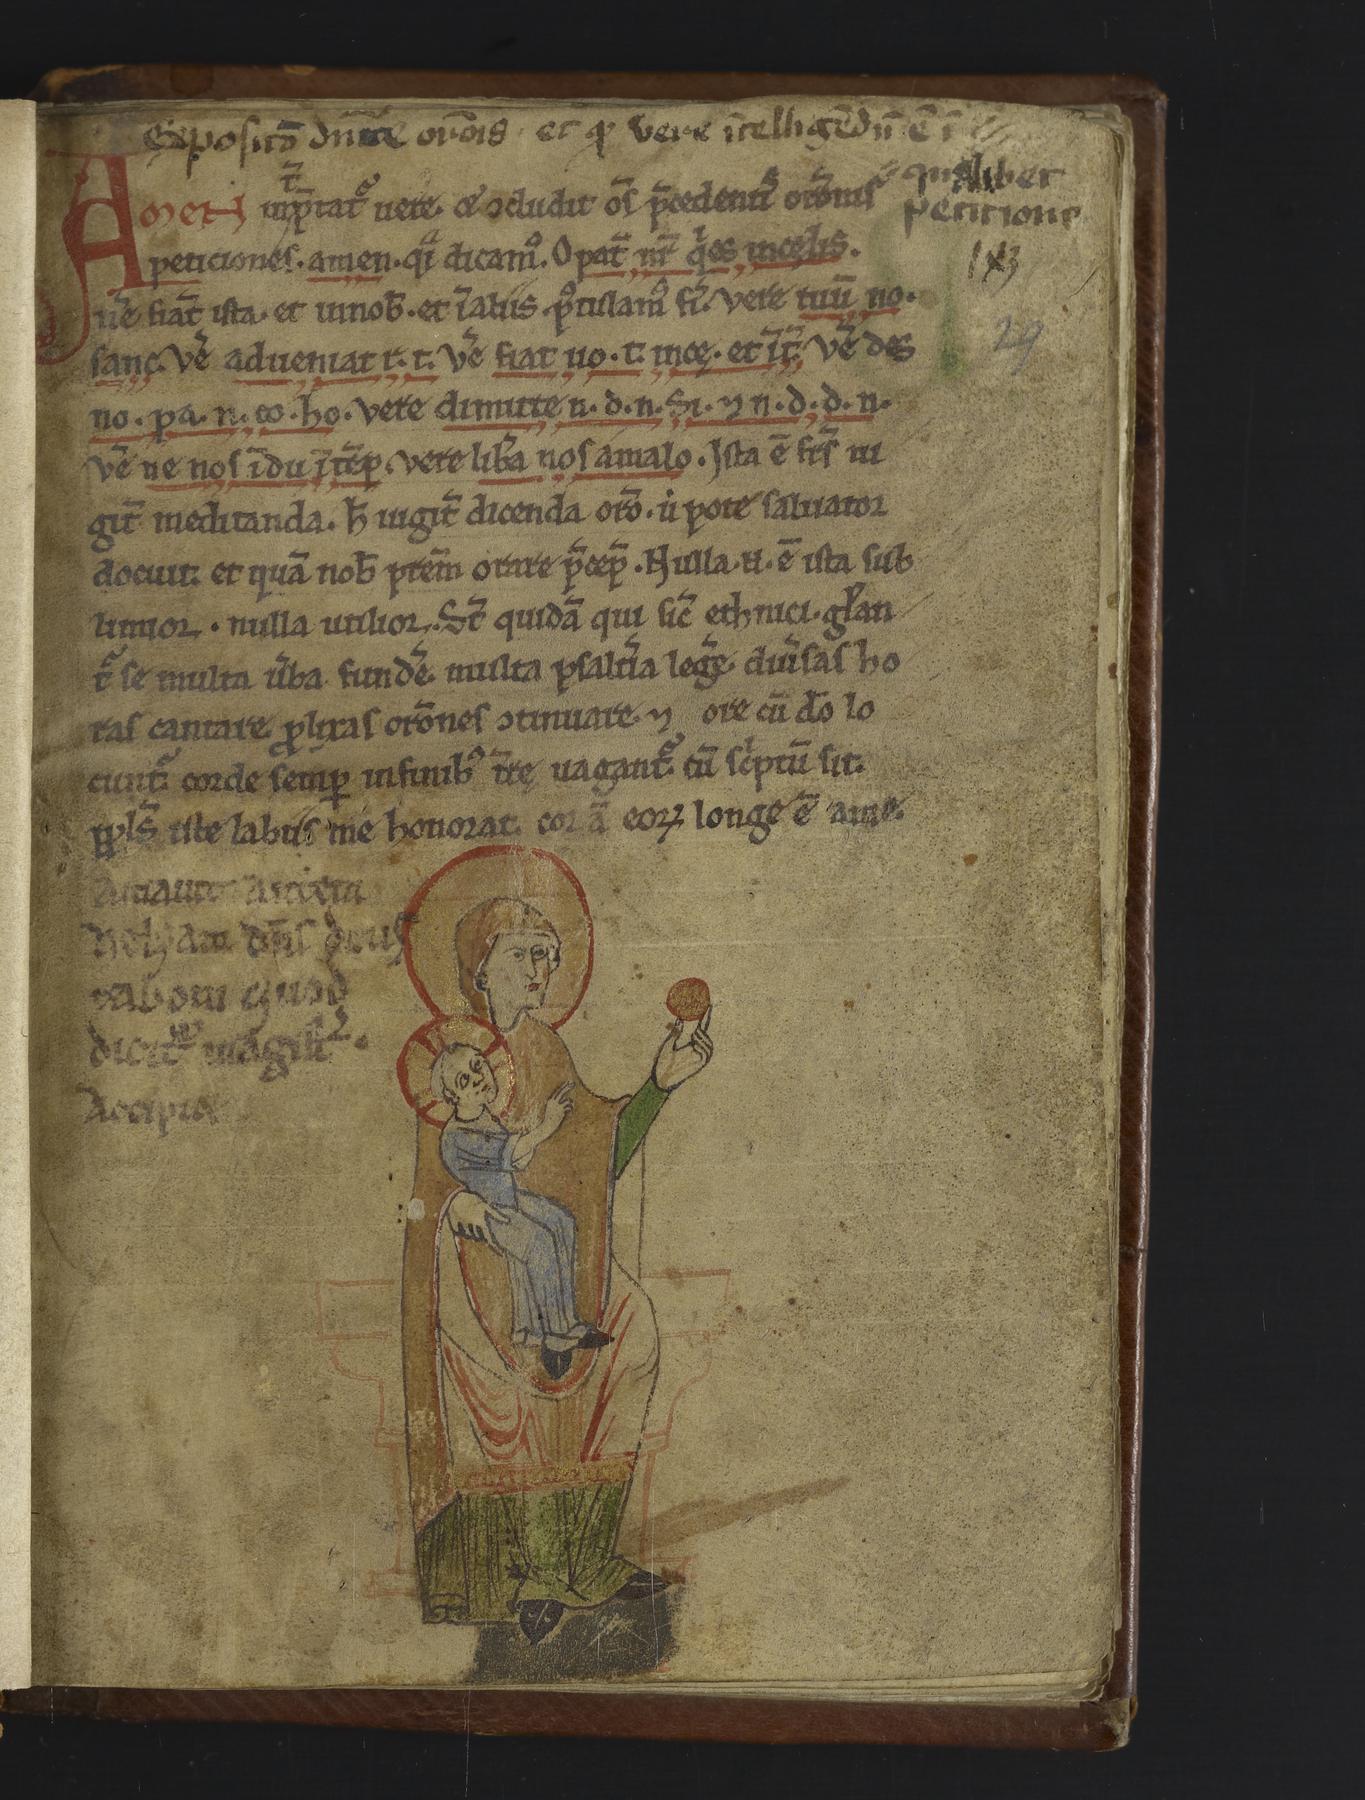 Coffee with a Codex: Prayers & Sermons